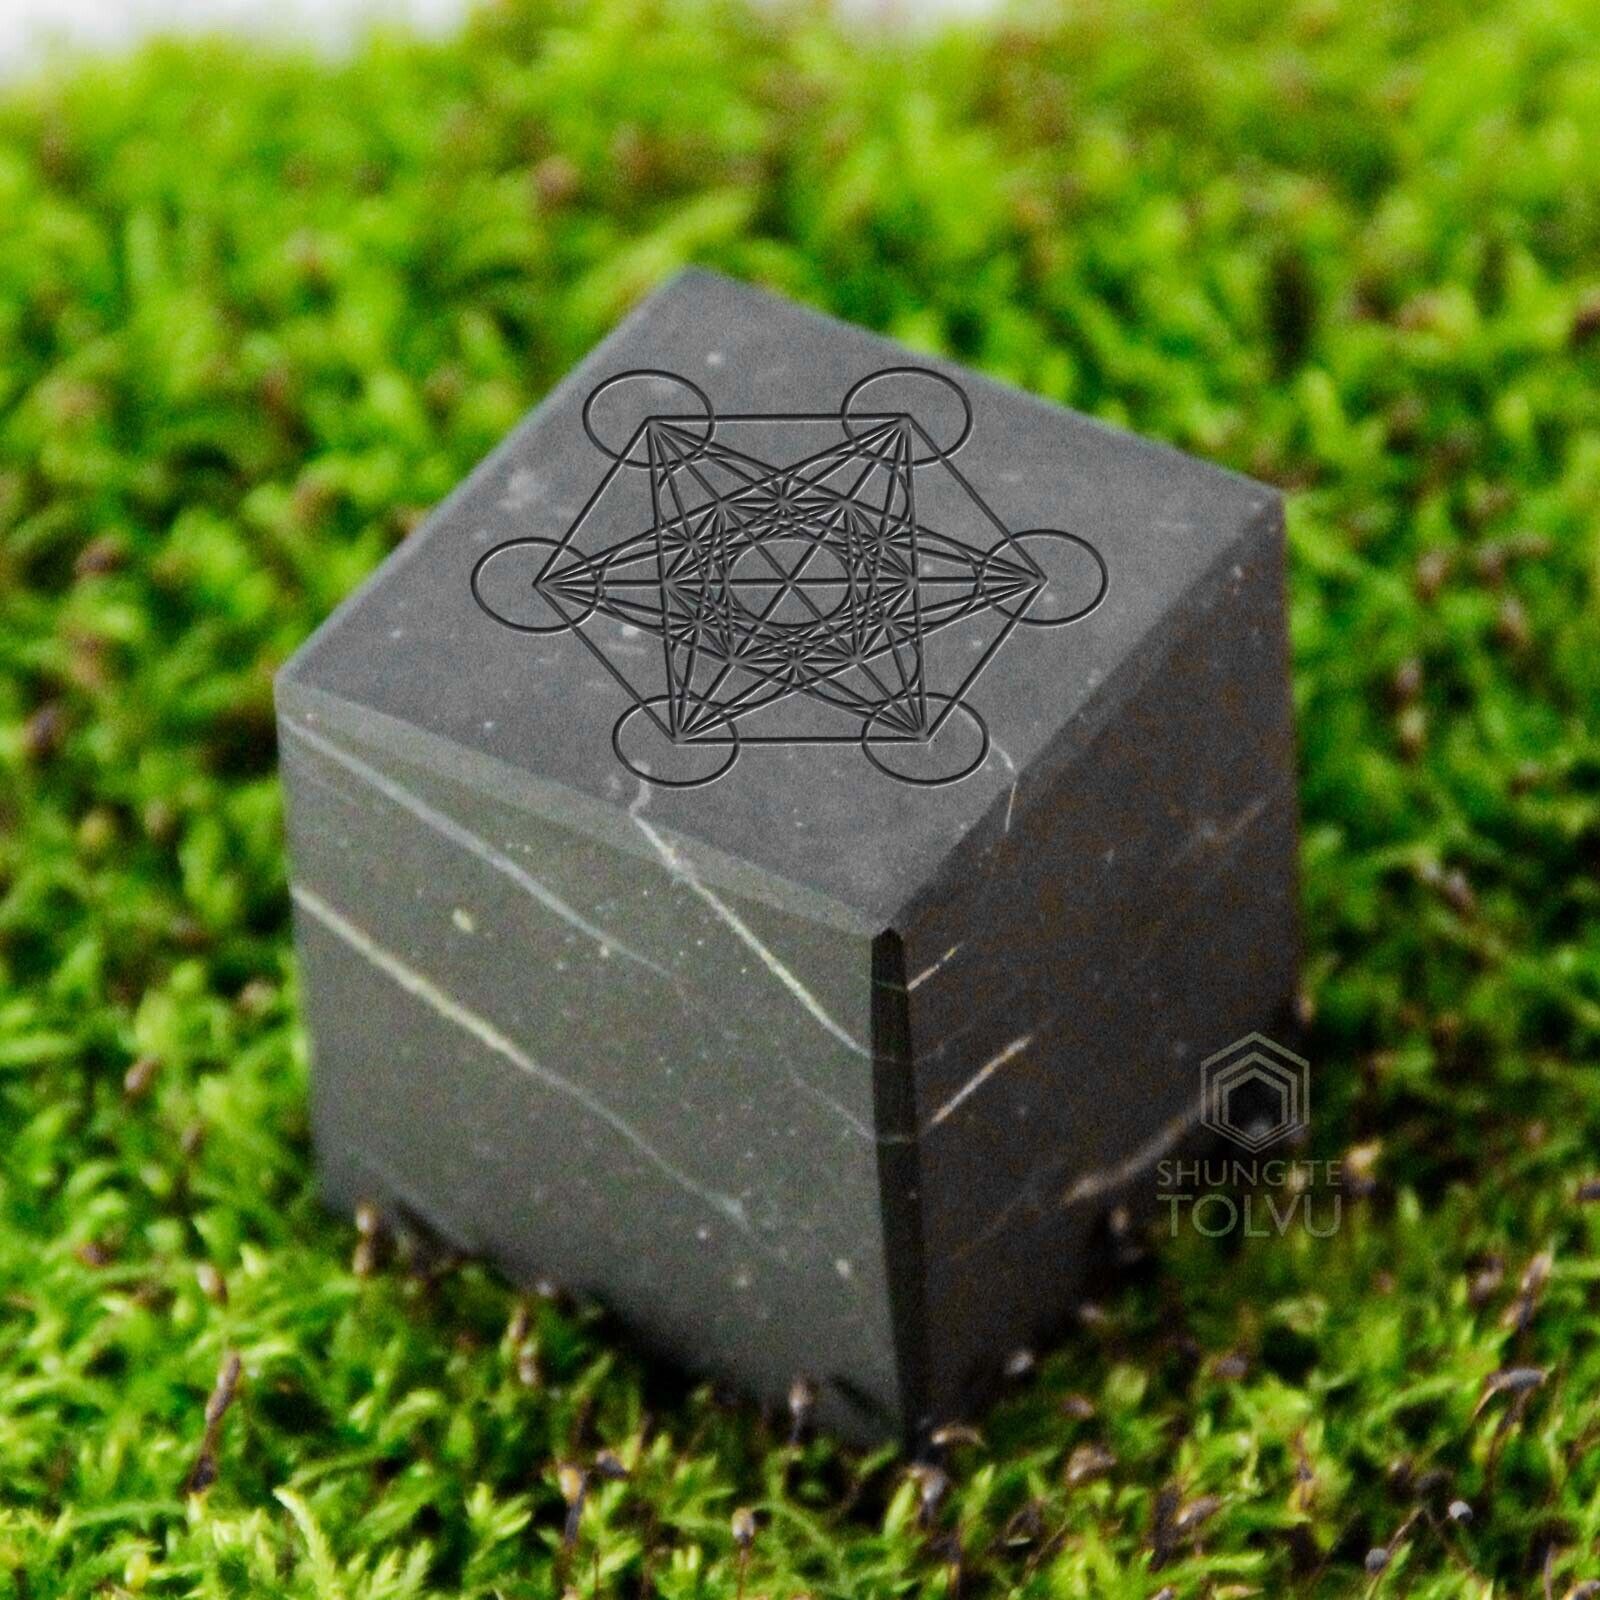 Shungite Cube Metatron High Quality Handmade carved Authentic Shungite, Tolvu